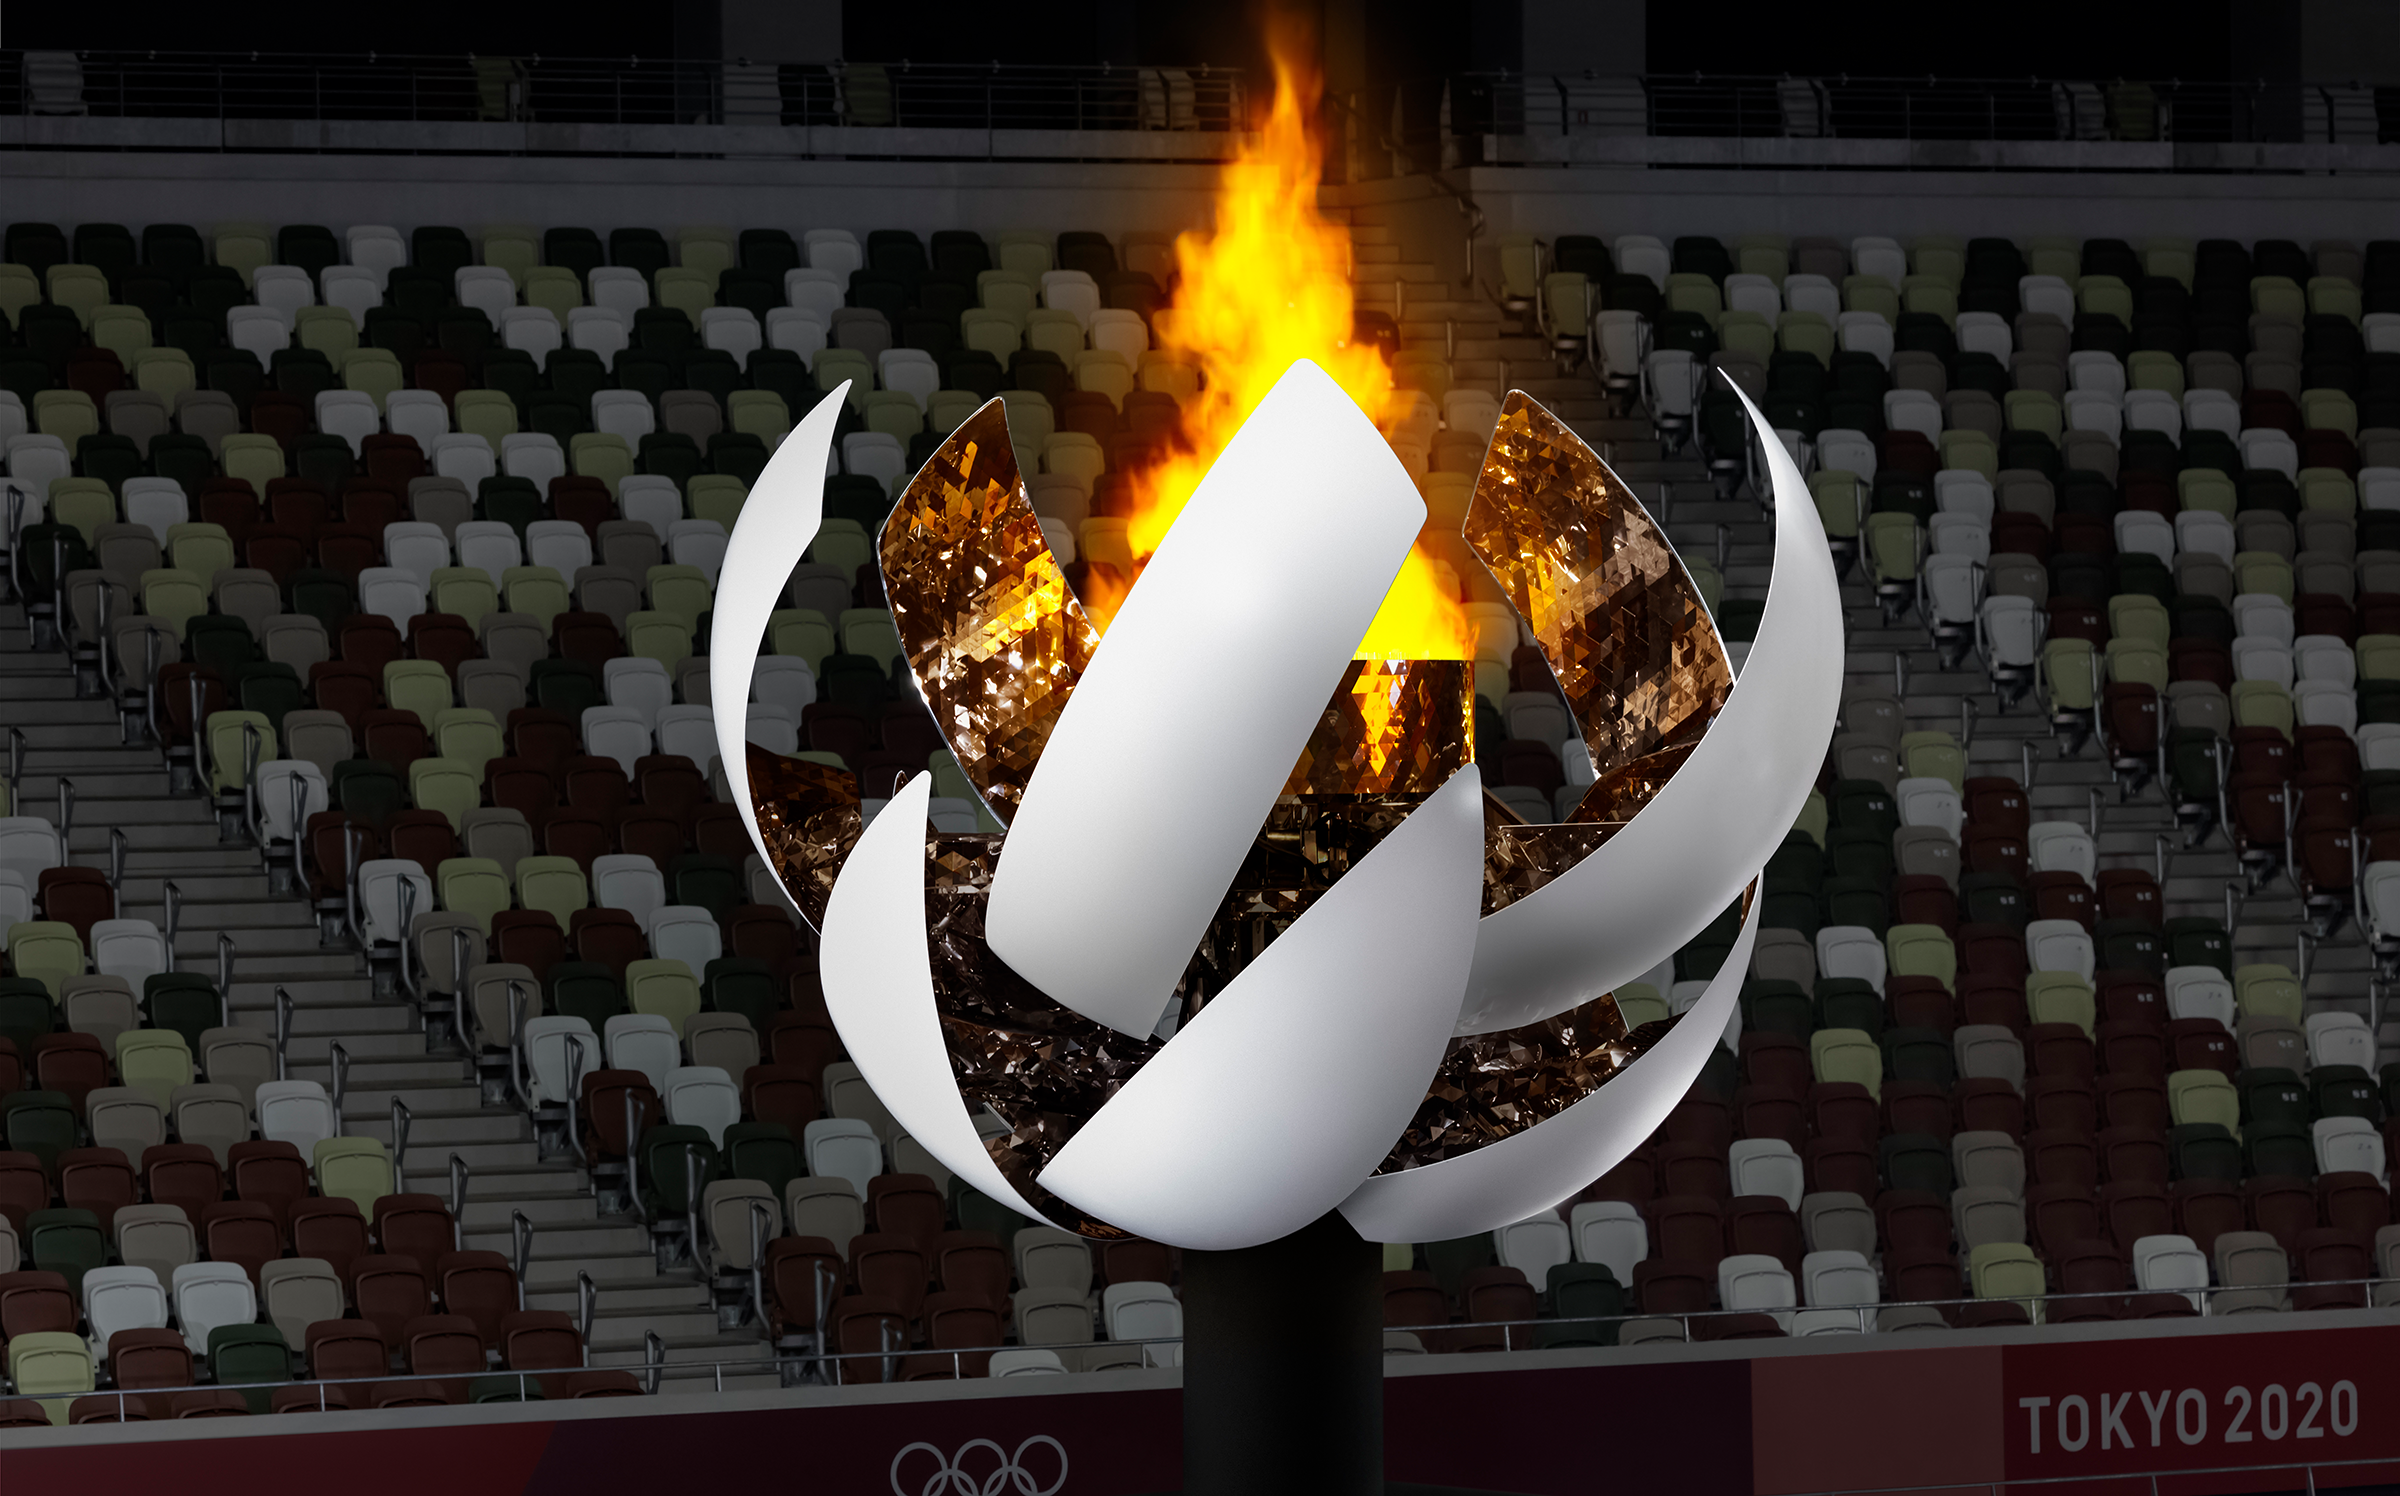 Tokyo2020 Olympic Cauldron / nendo